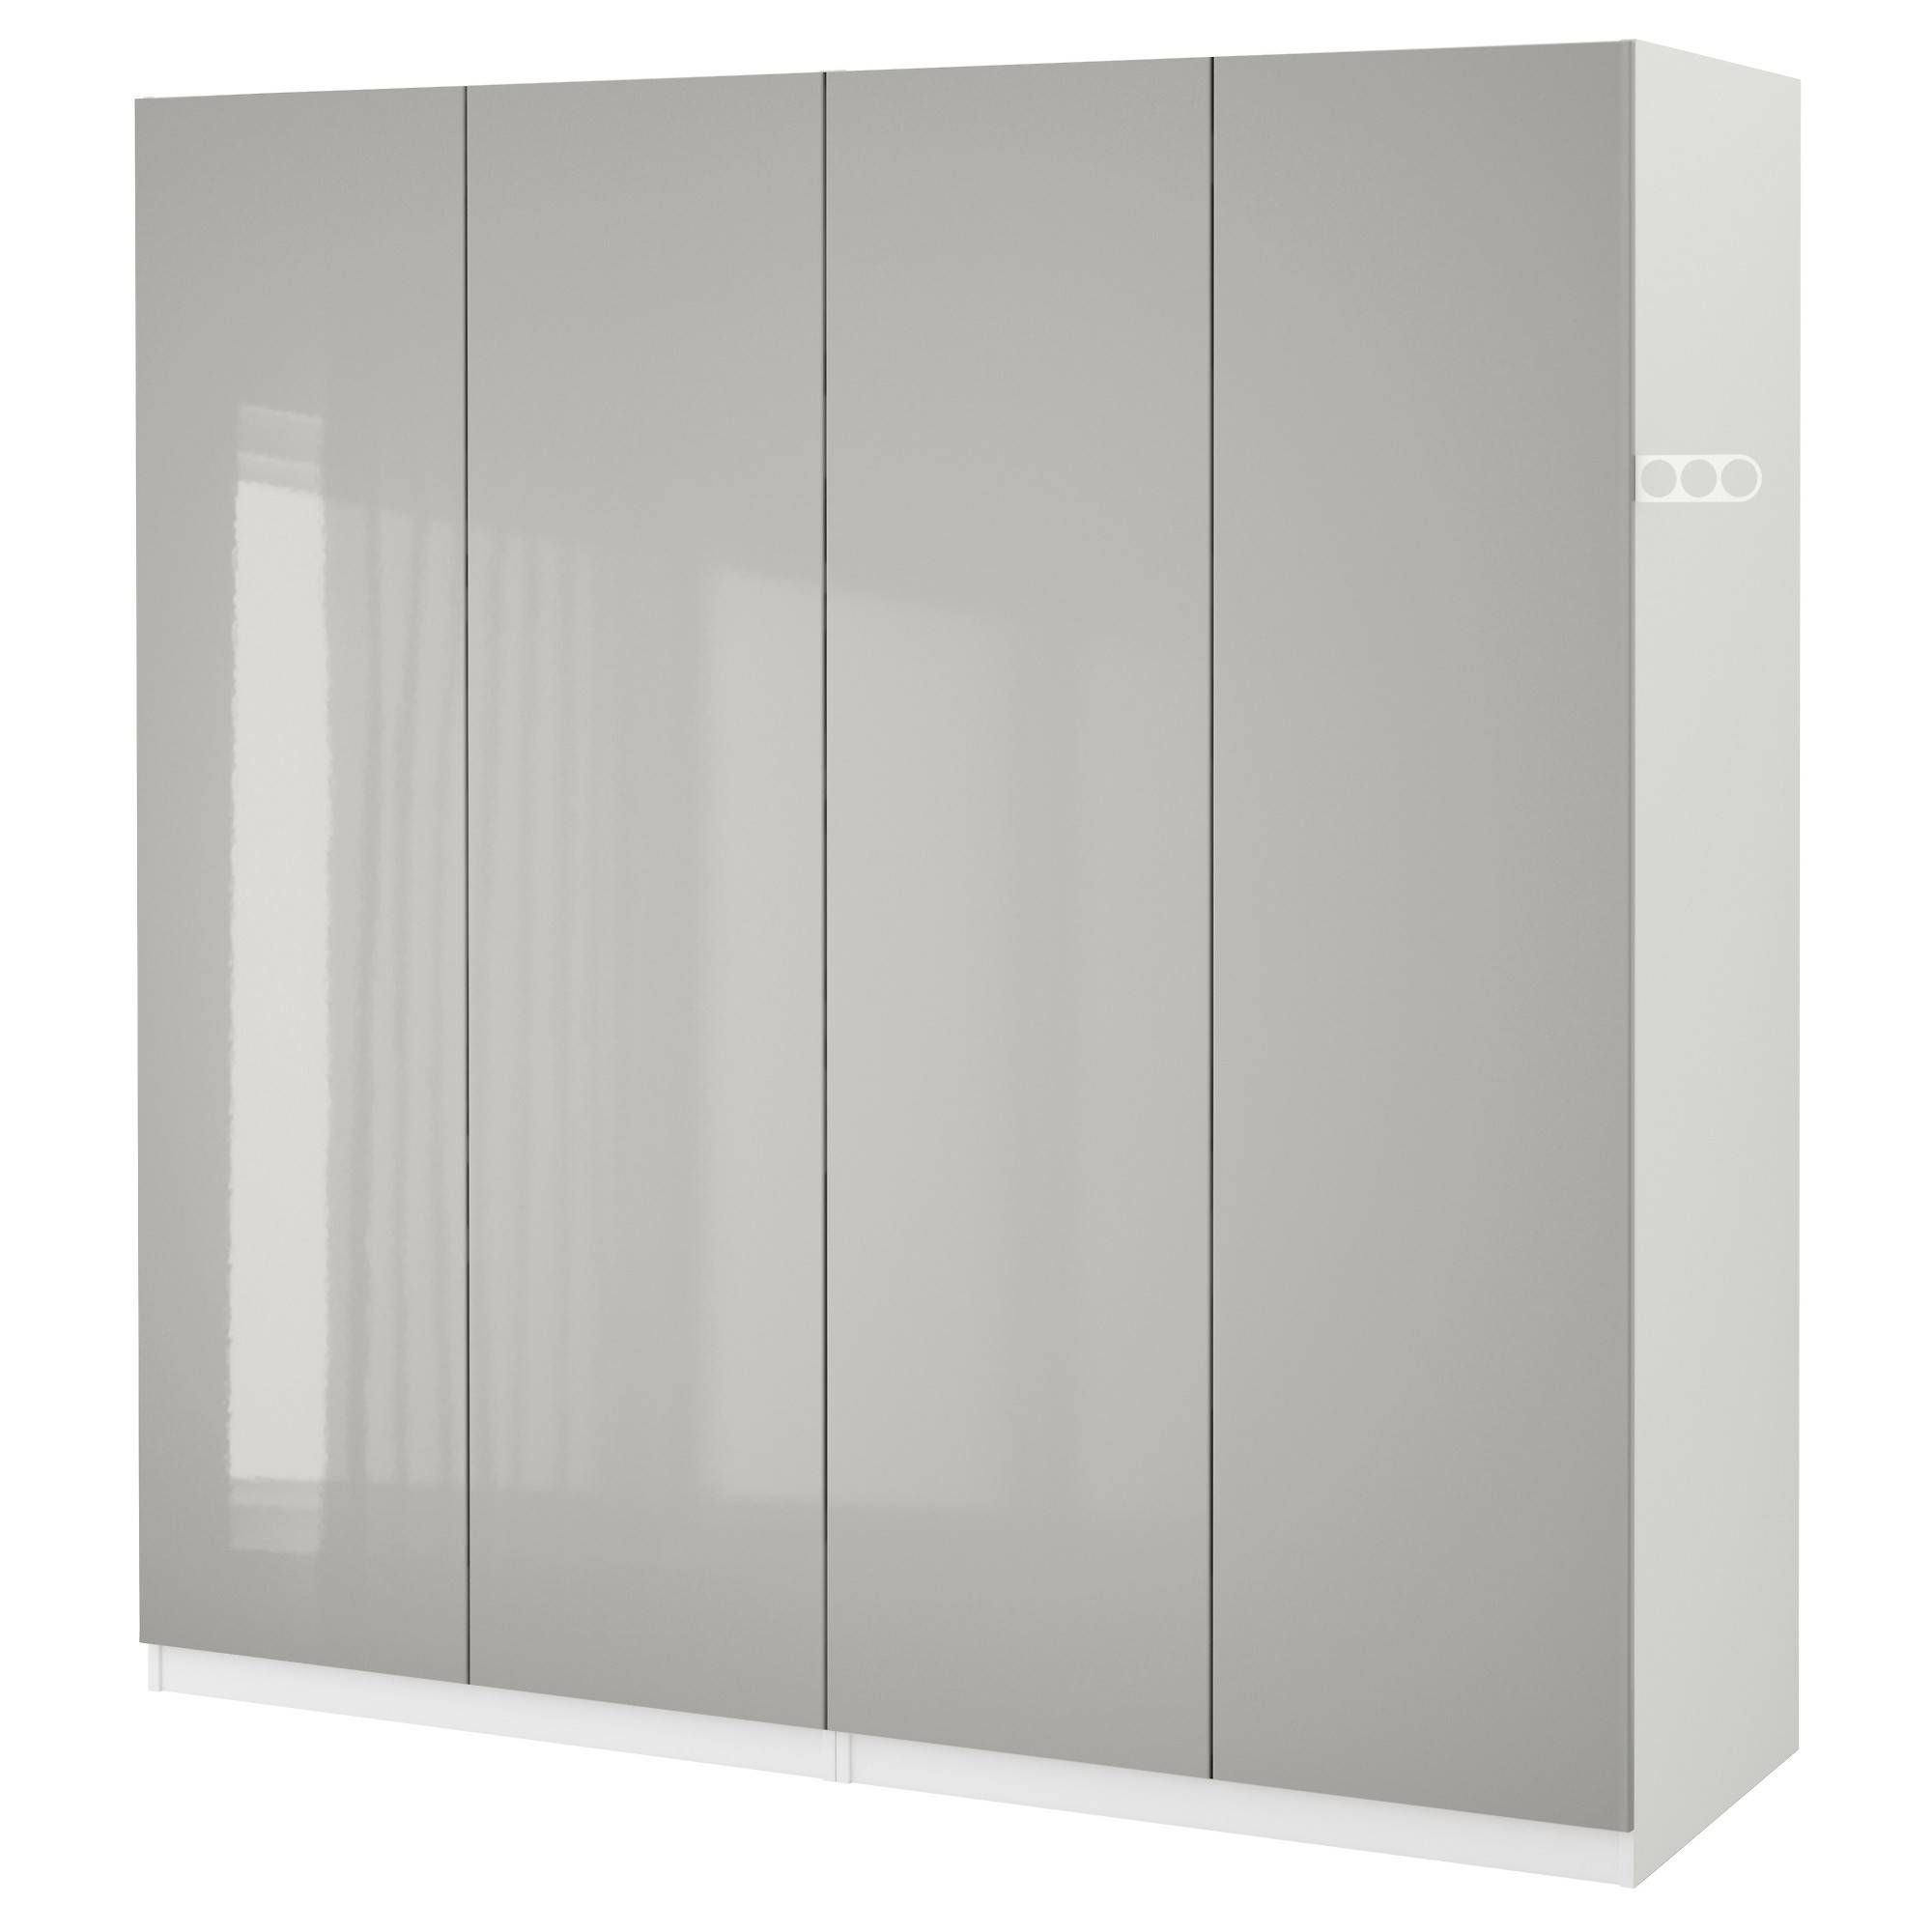 Pax Wardrobe White/fardal High Gloss Light Grey 200x60x201 Cm – Ikea With Regard To White Gloss Wardrobes (View 8 of 15)